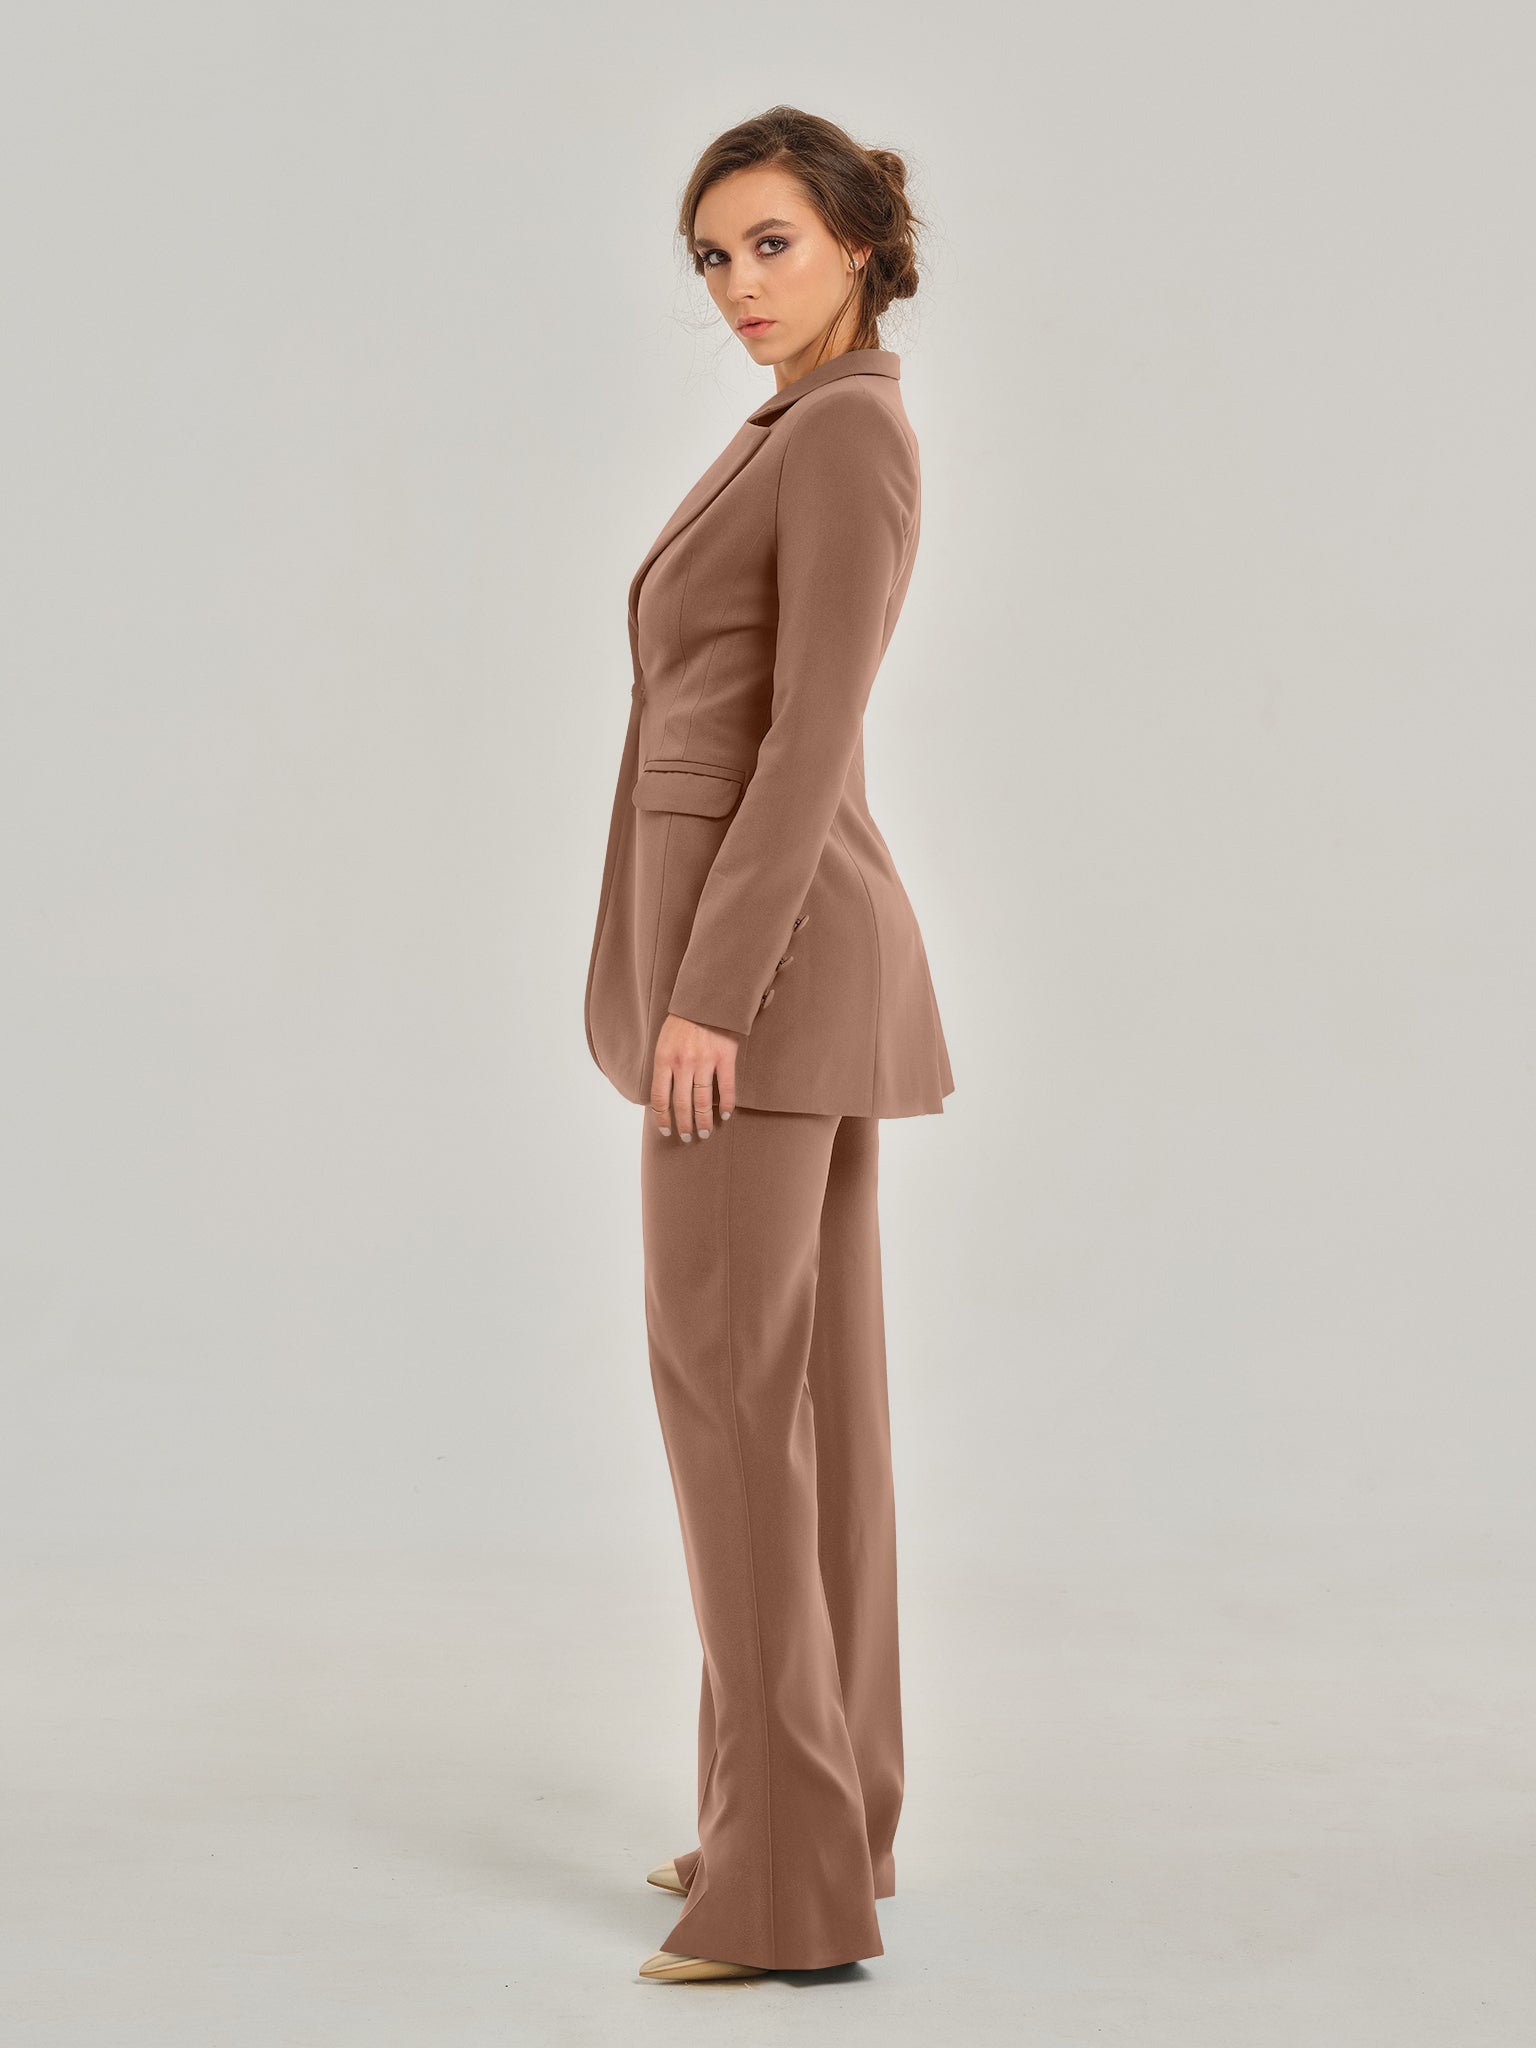 Sandstorm High-Waist Flared Trousers by Tia Dorraine Women's Luxury Fashion Designer Clothing Brand